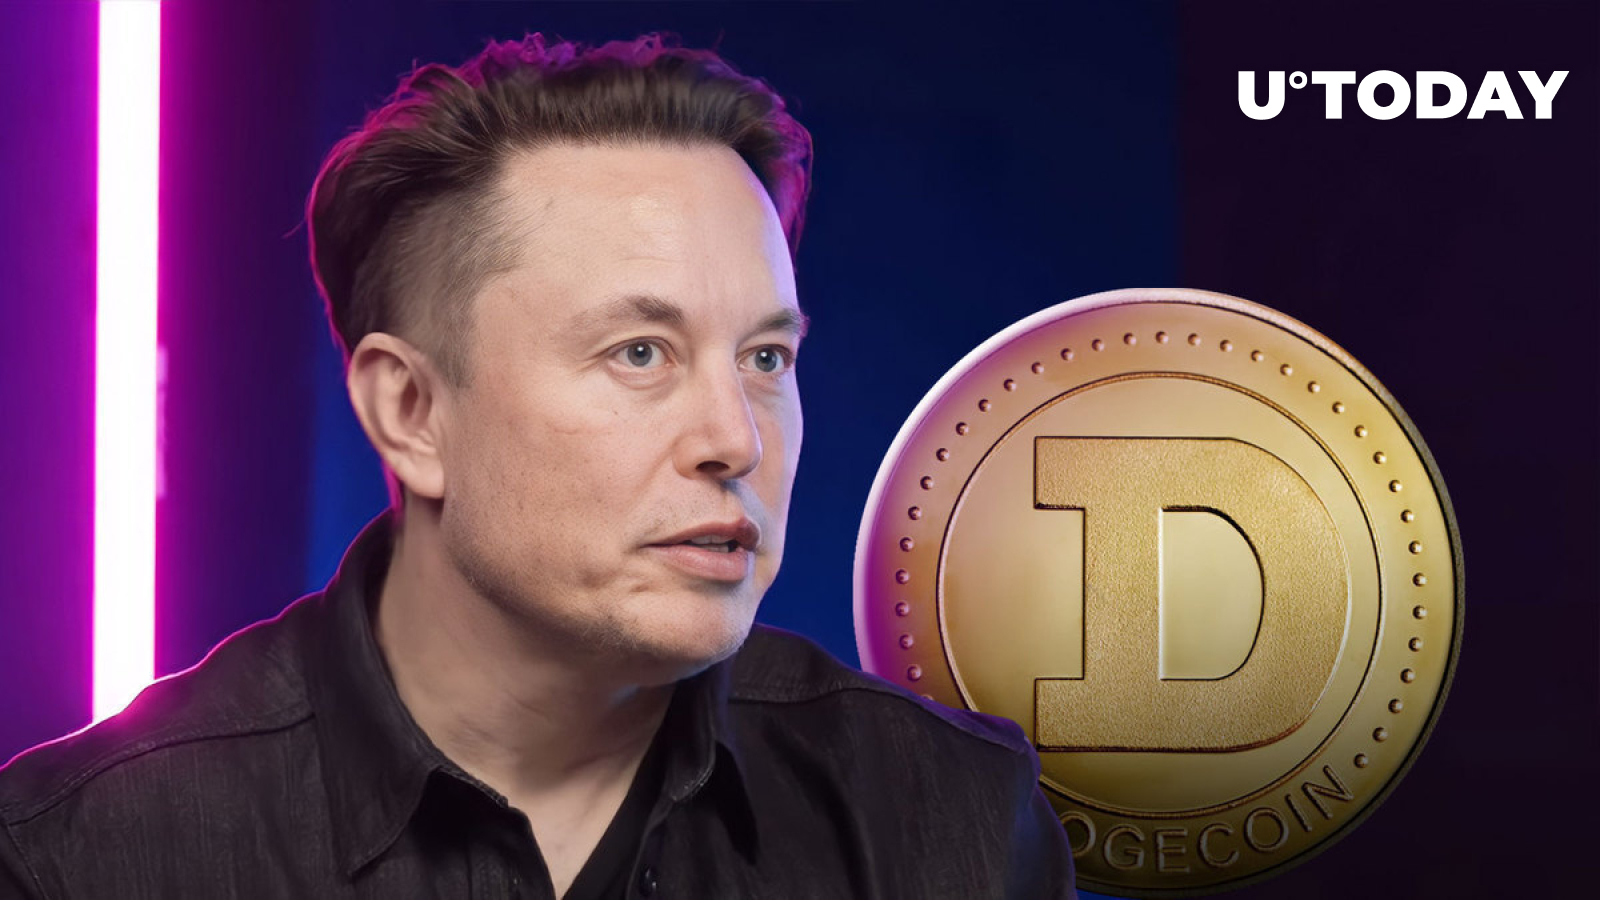 Dogecoin Founder Supports Elon Musk’s Recent Meme Post